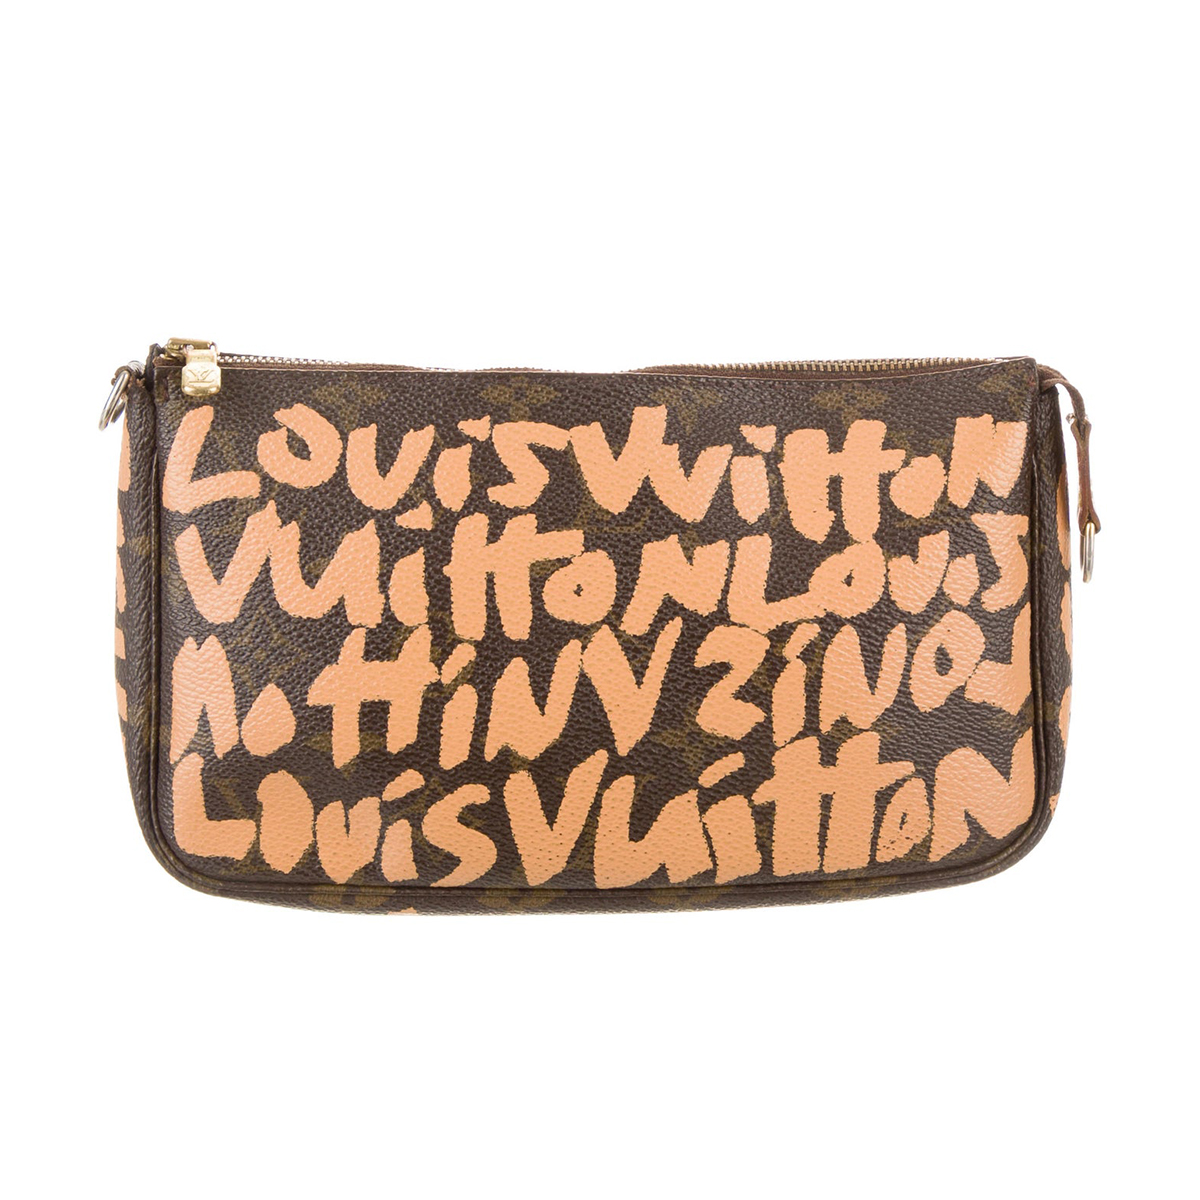 Who made Jennifer Love Hewitt's black shoes and brown purse?  Louis vuitton  handbags black, Vuitton outfit, Louis vuitton bag